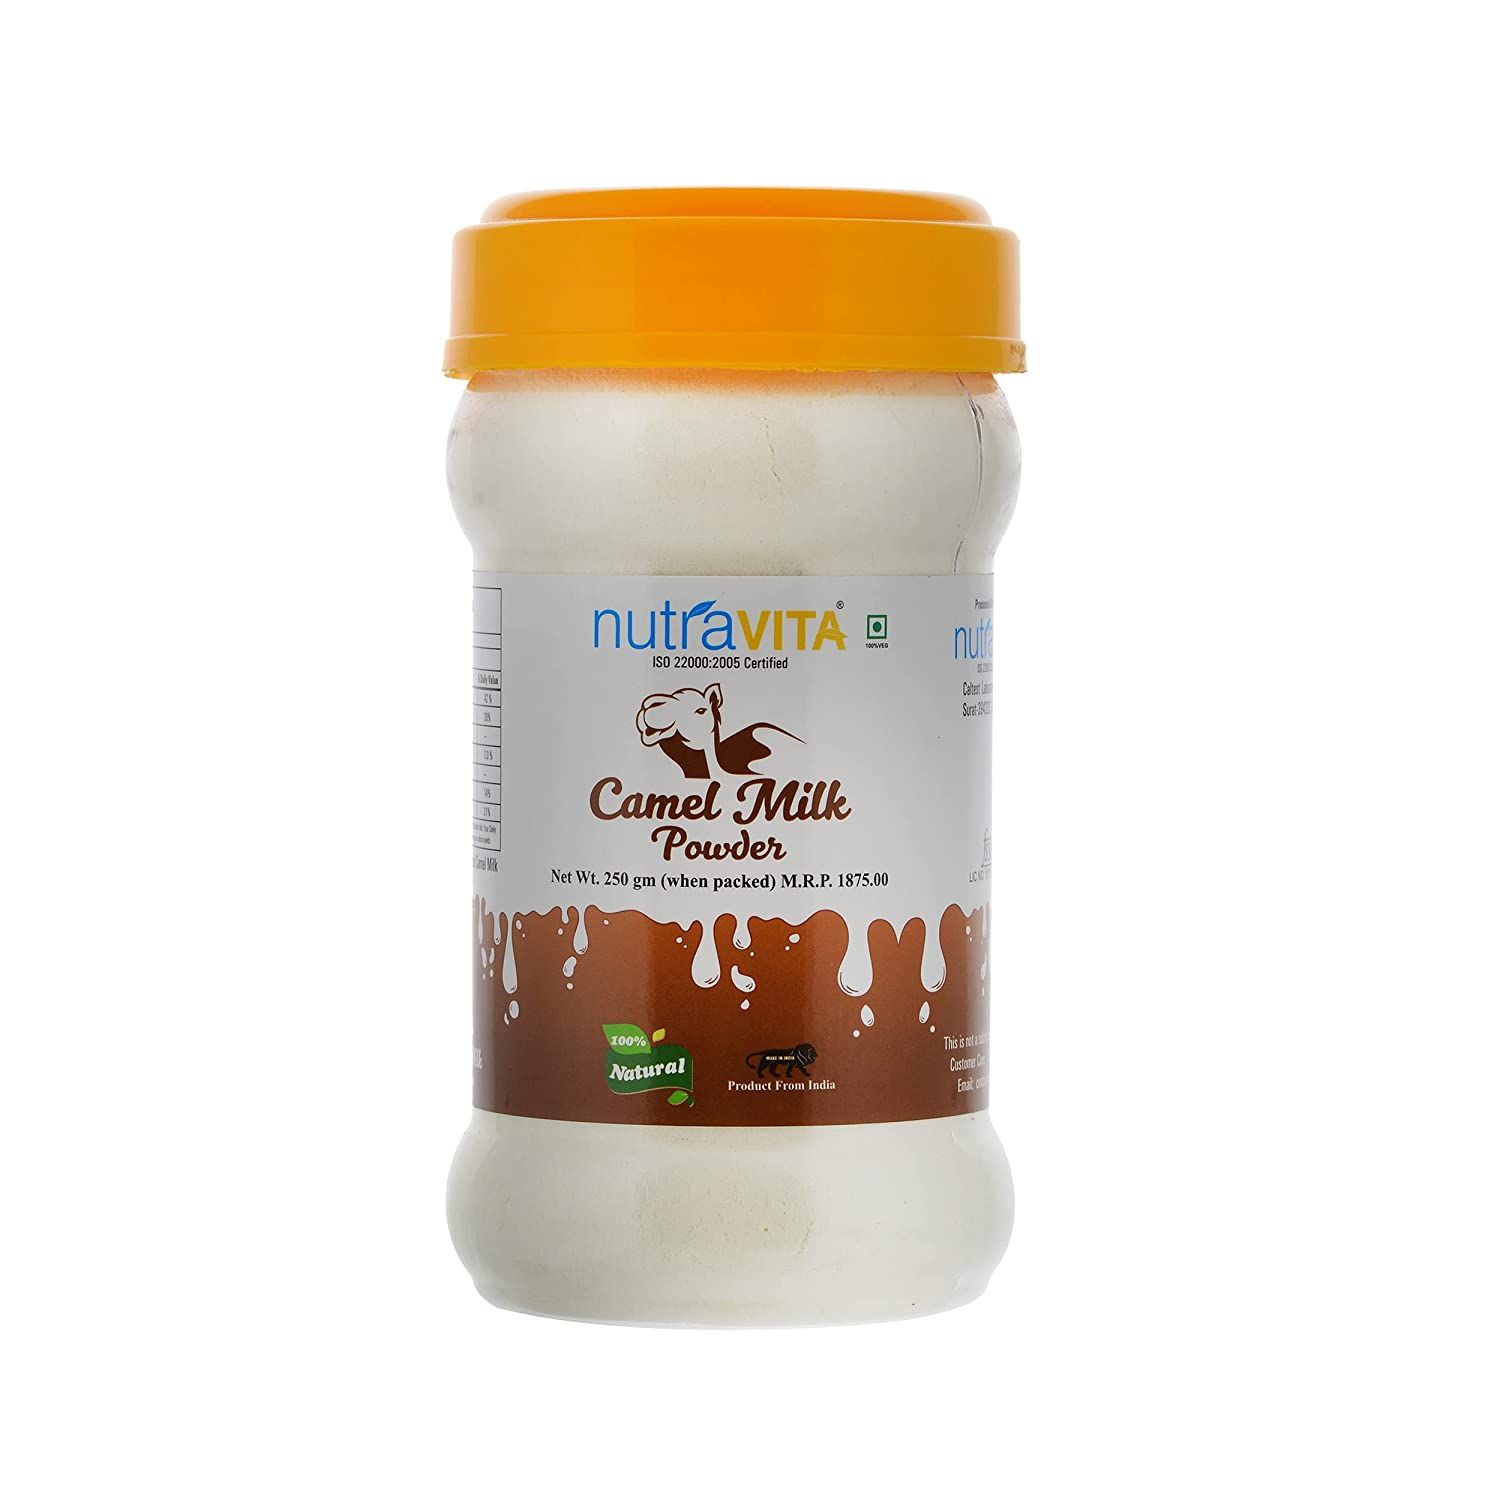 Nutravita Camel Milk Powder Image